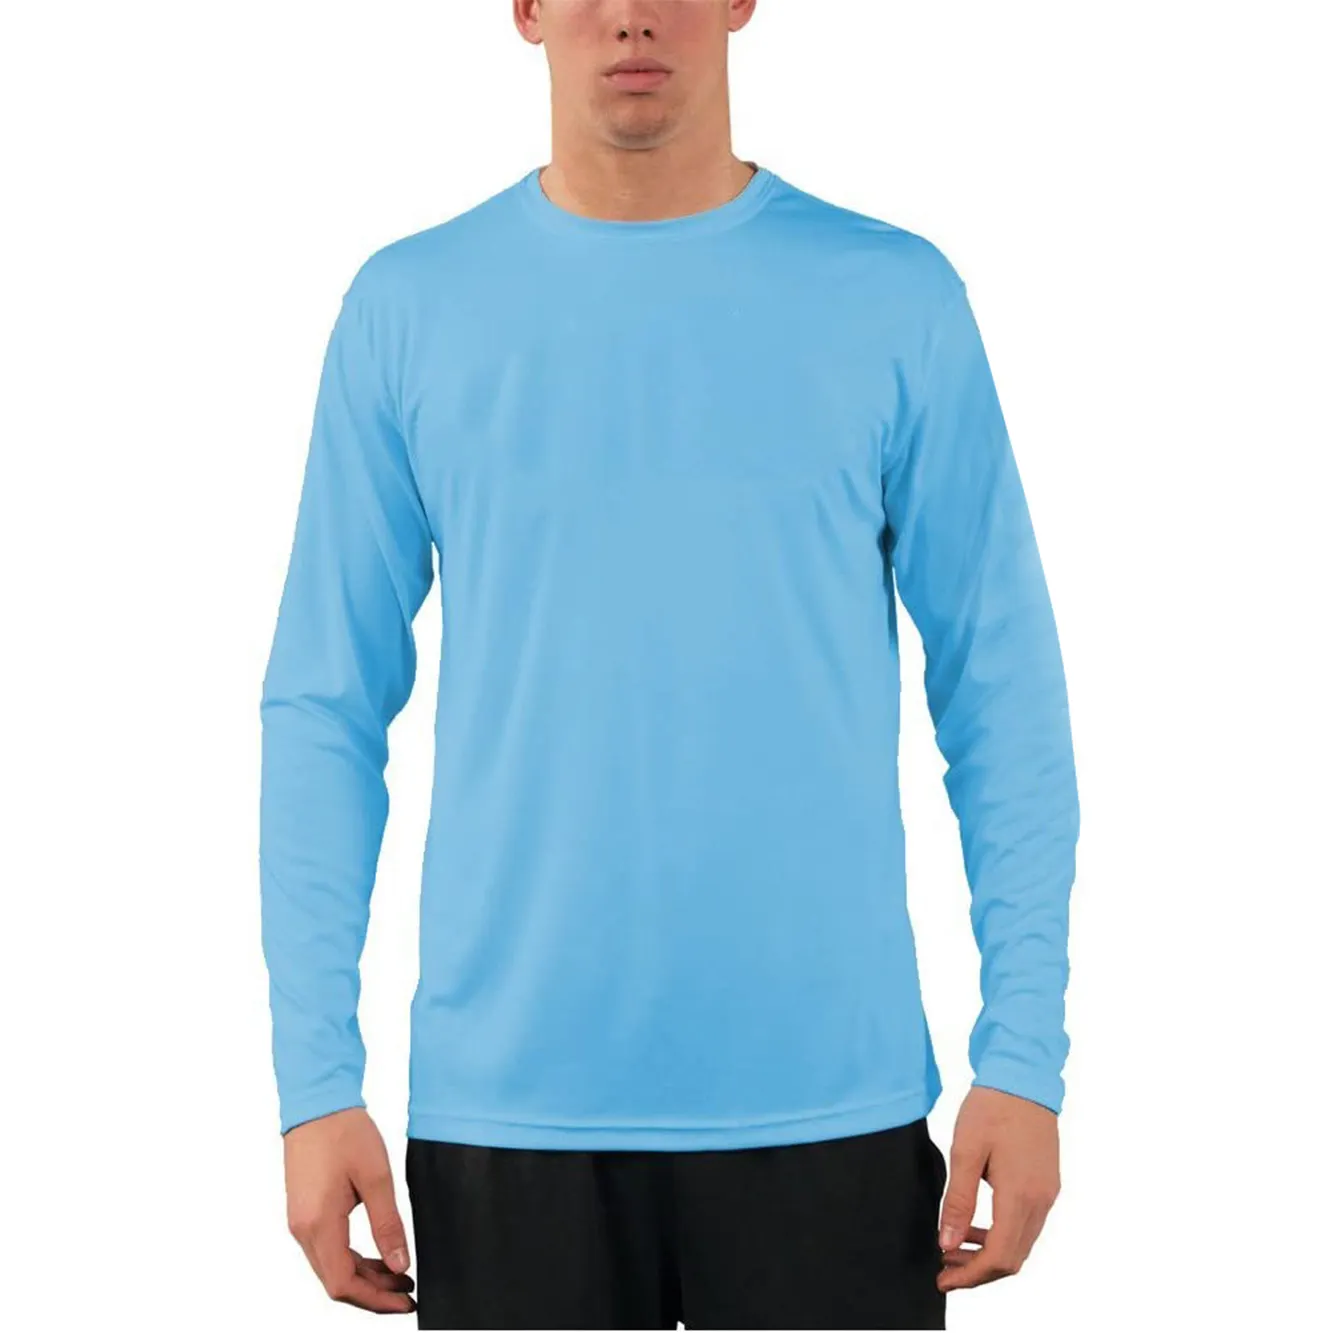 C גברים של UPF 50 + UV שמש הגנת ביצועים ארוך שרוול חיצוני T חולצה